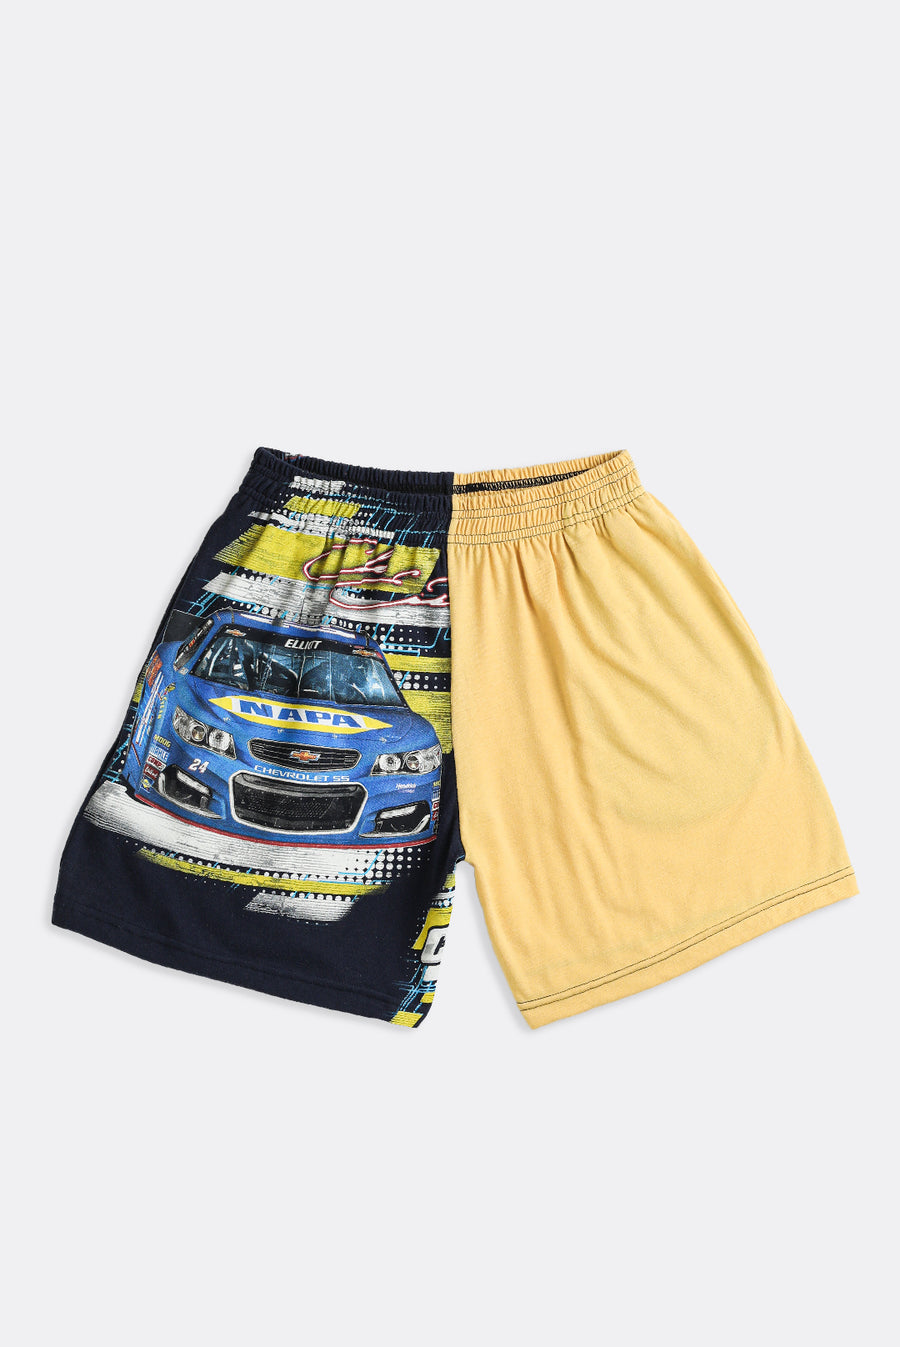 Unisex Rework Racing Tee Shorts - S